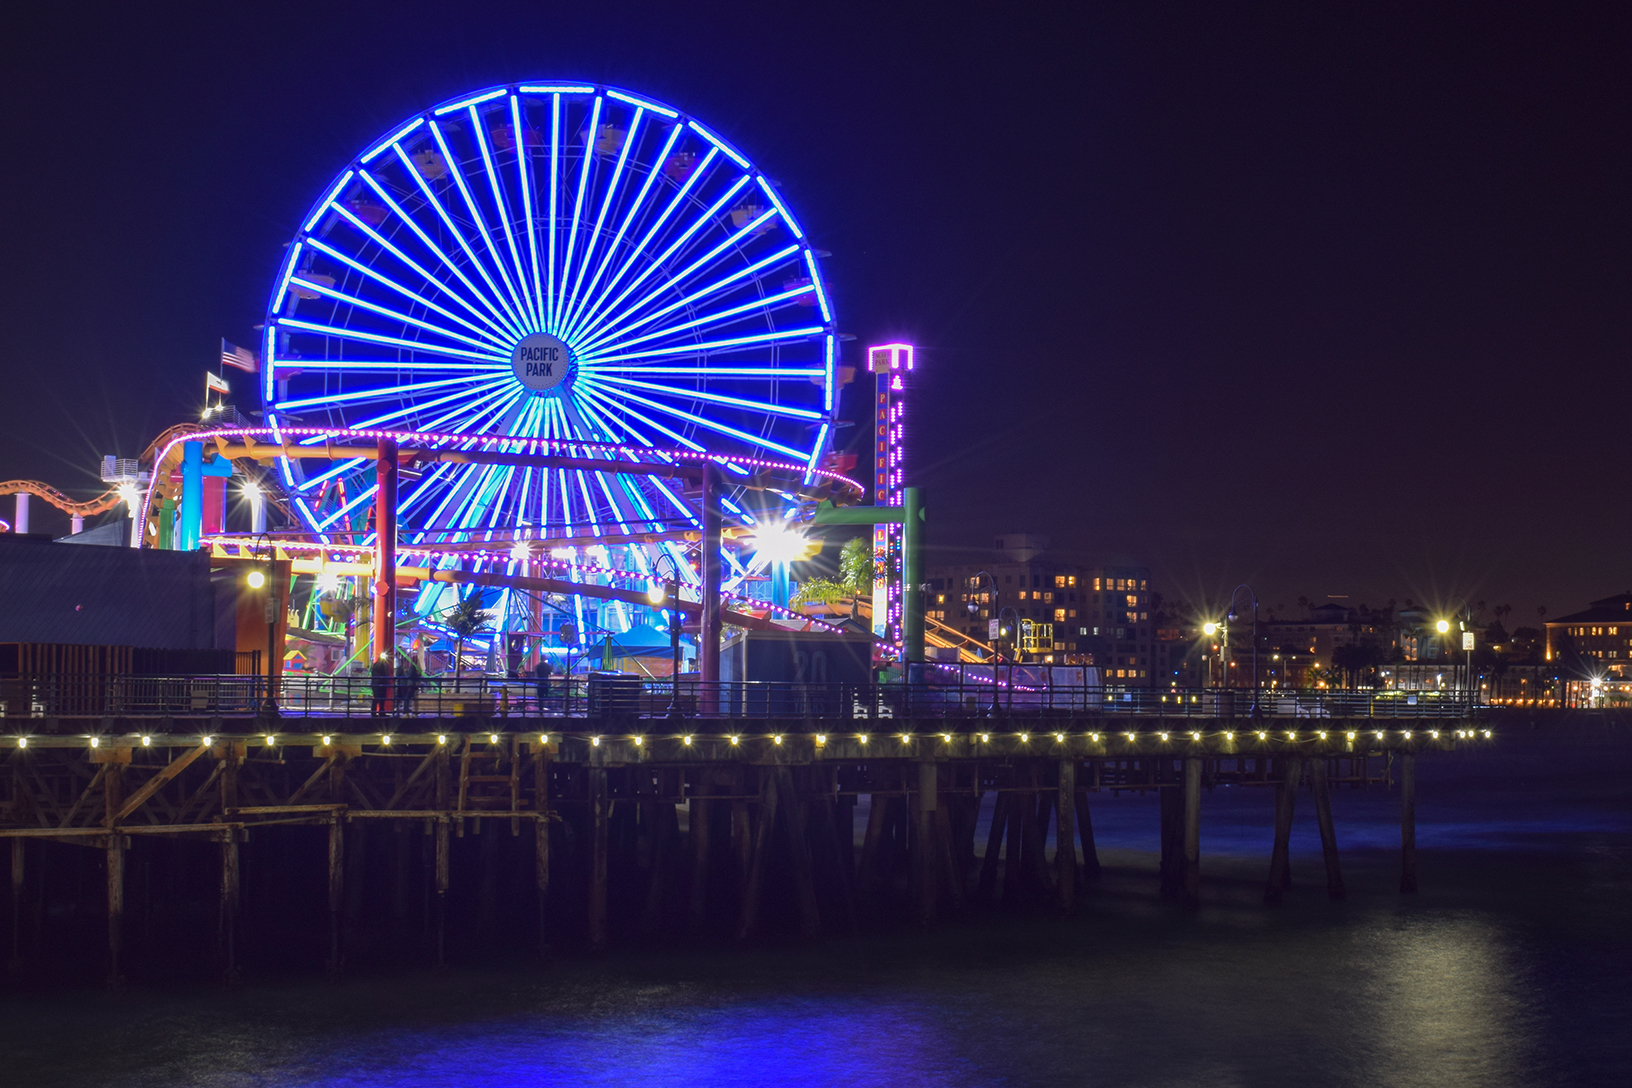 7 Fabulous California Ferris Wheels